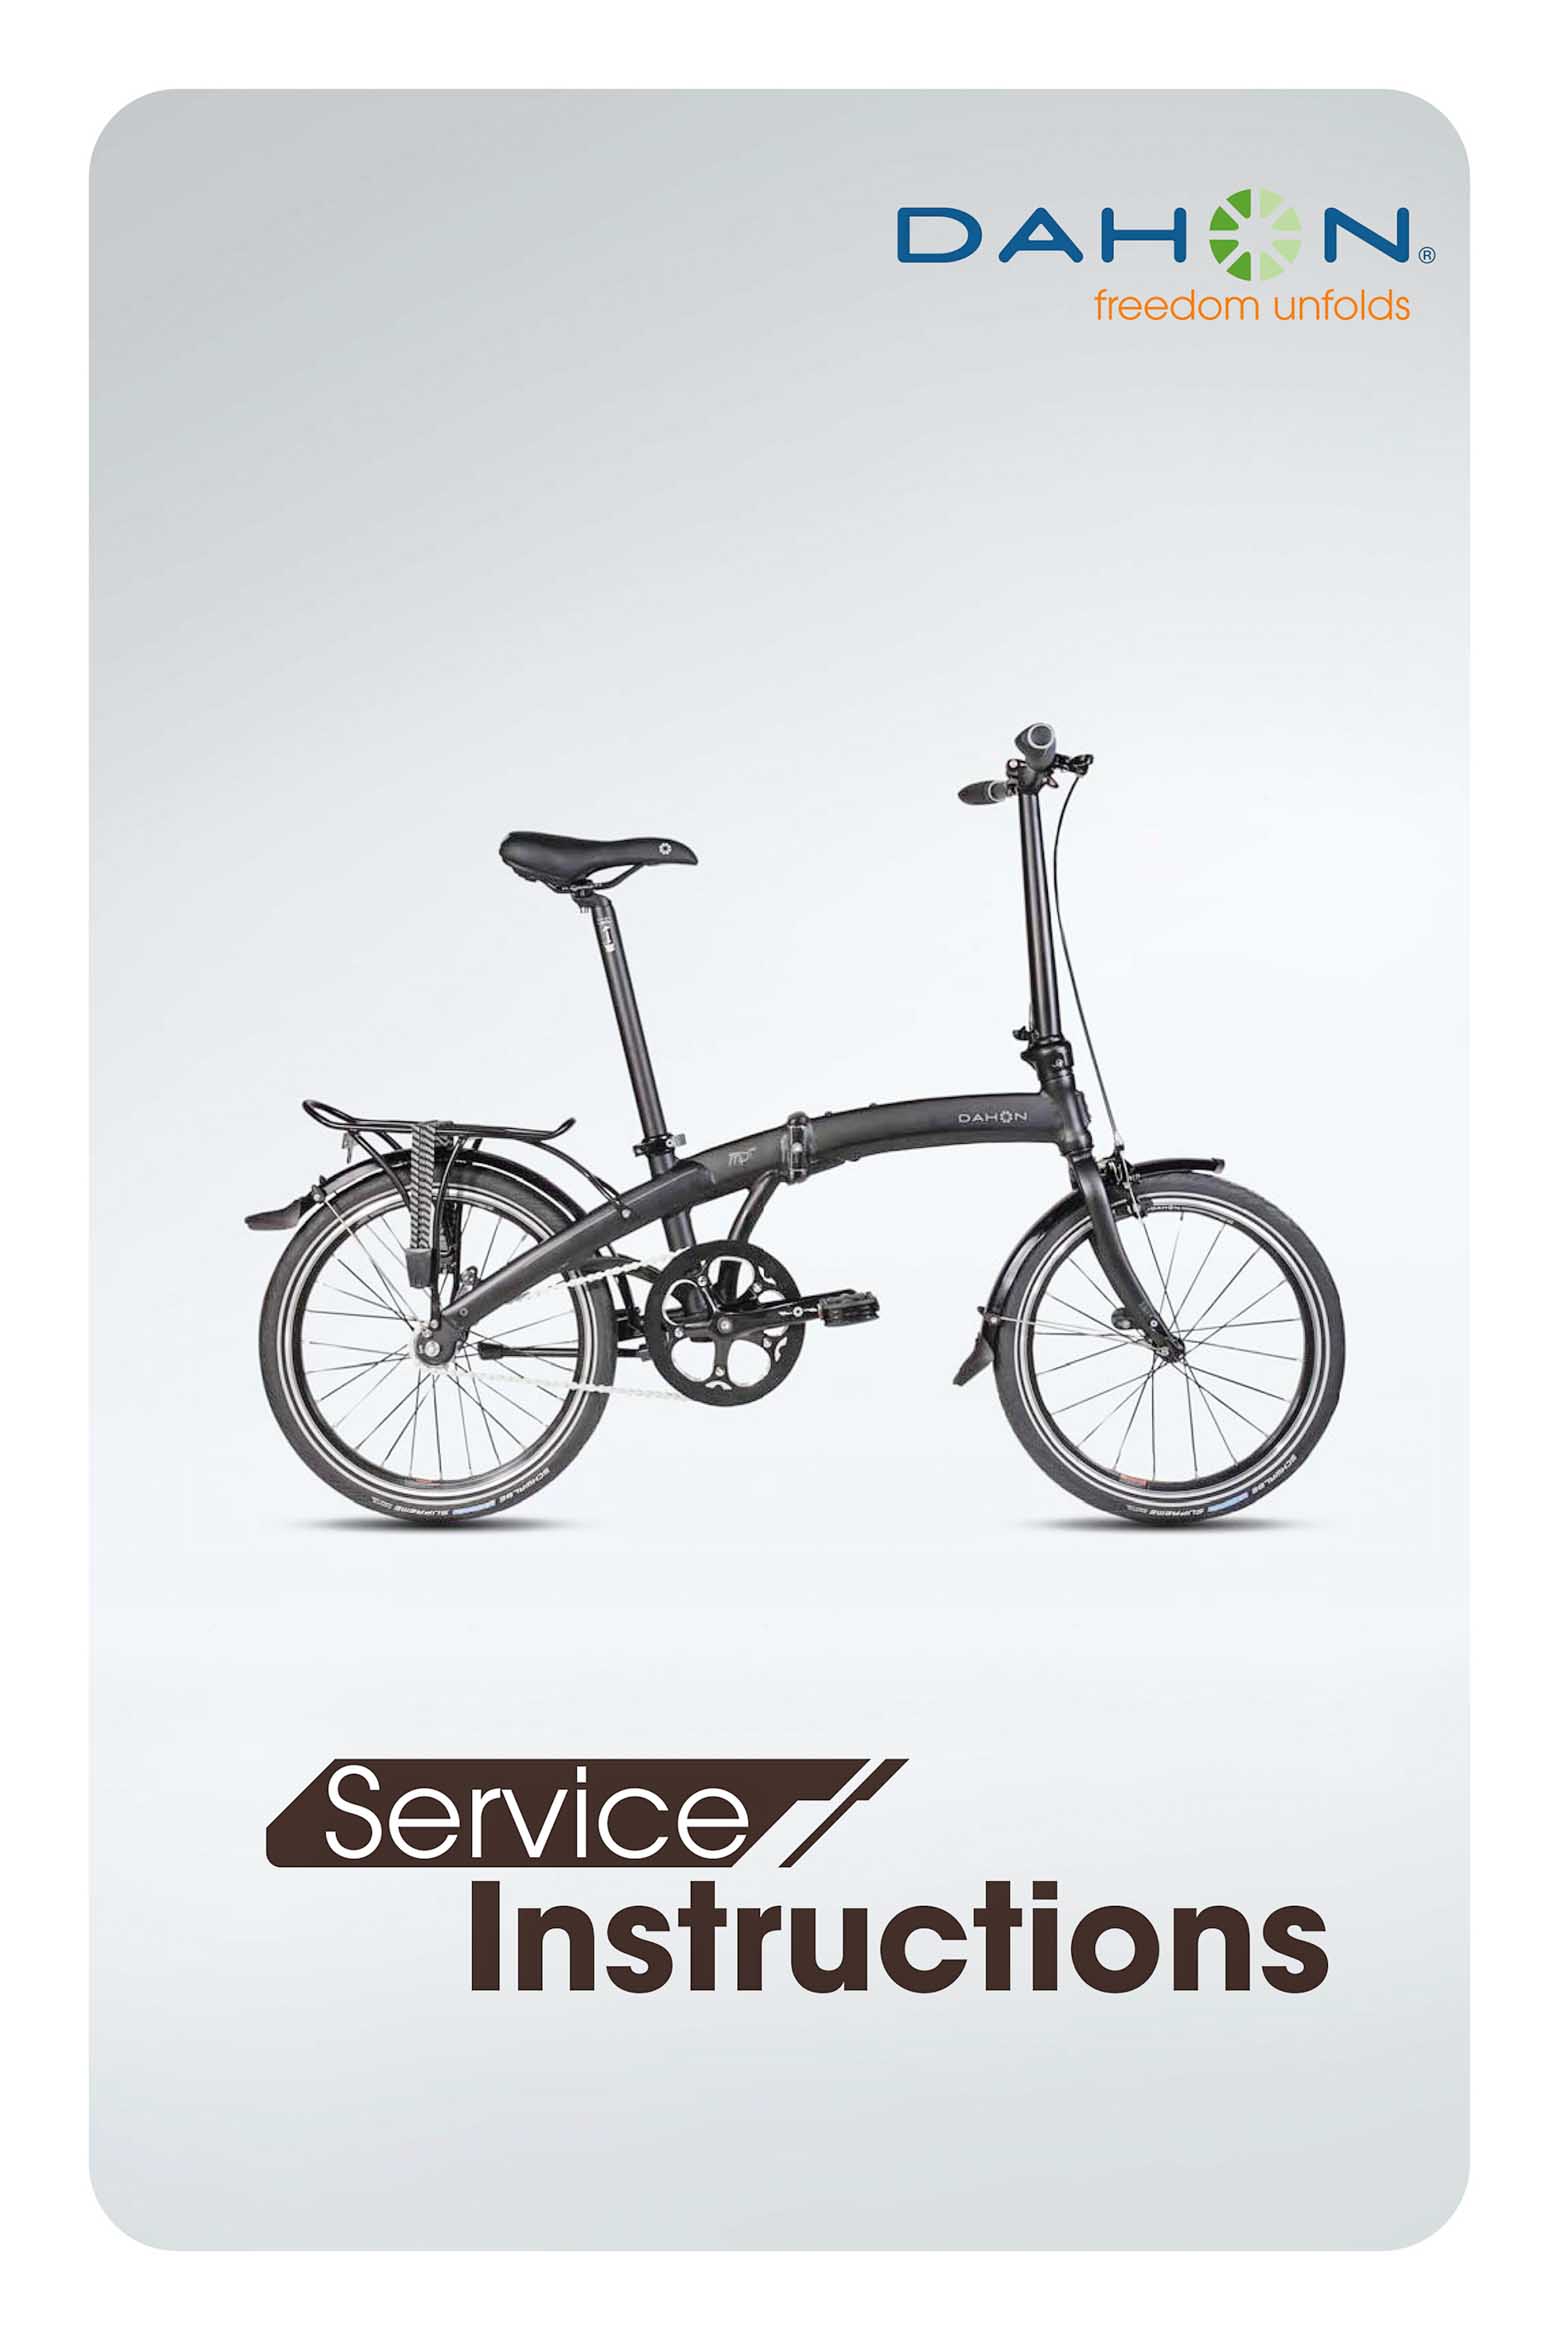 Dahon - Service Instructions 2012 page 01 main image